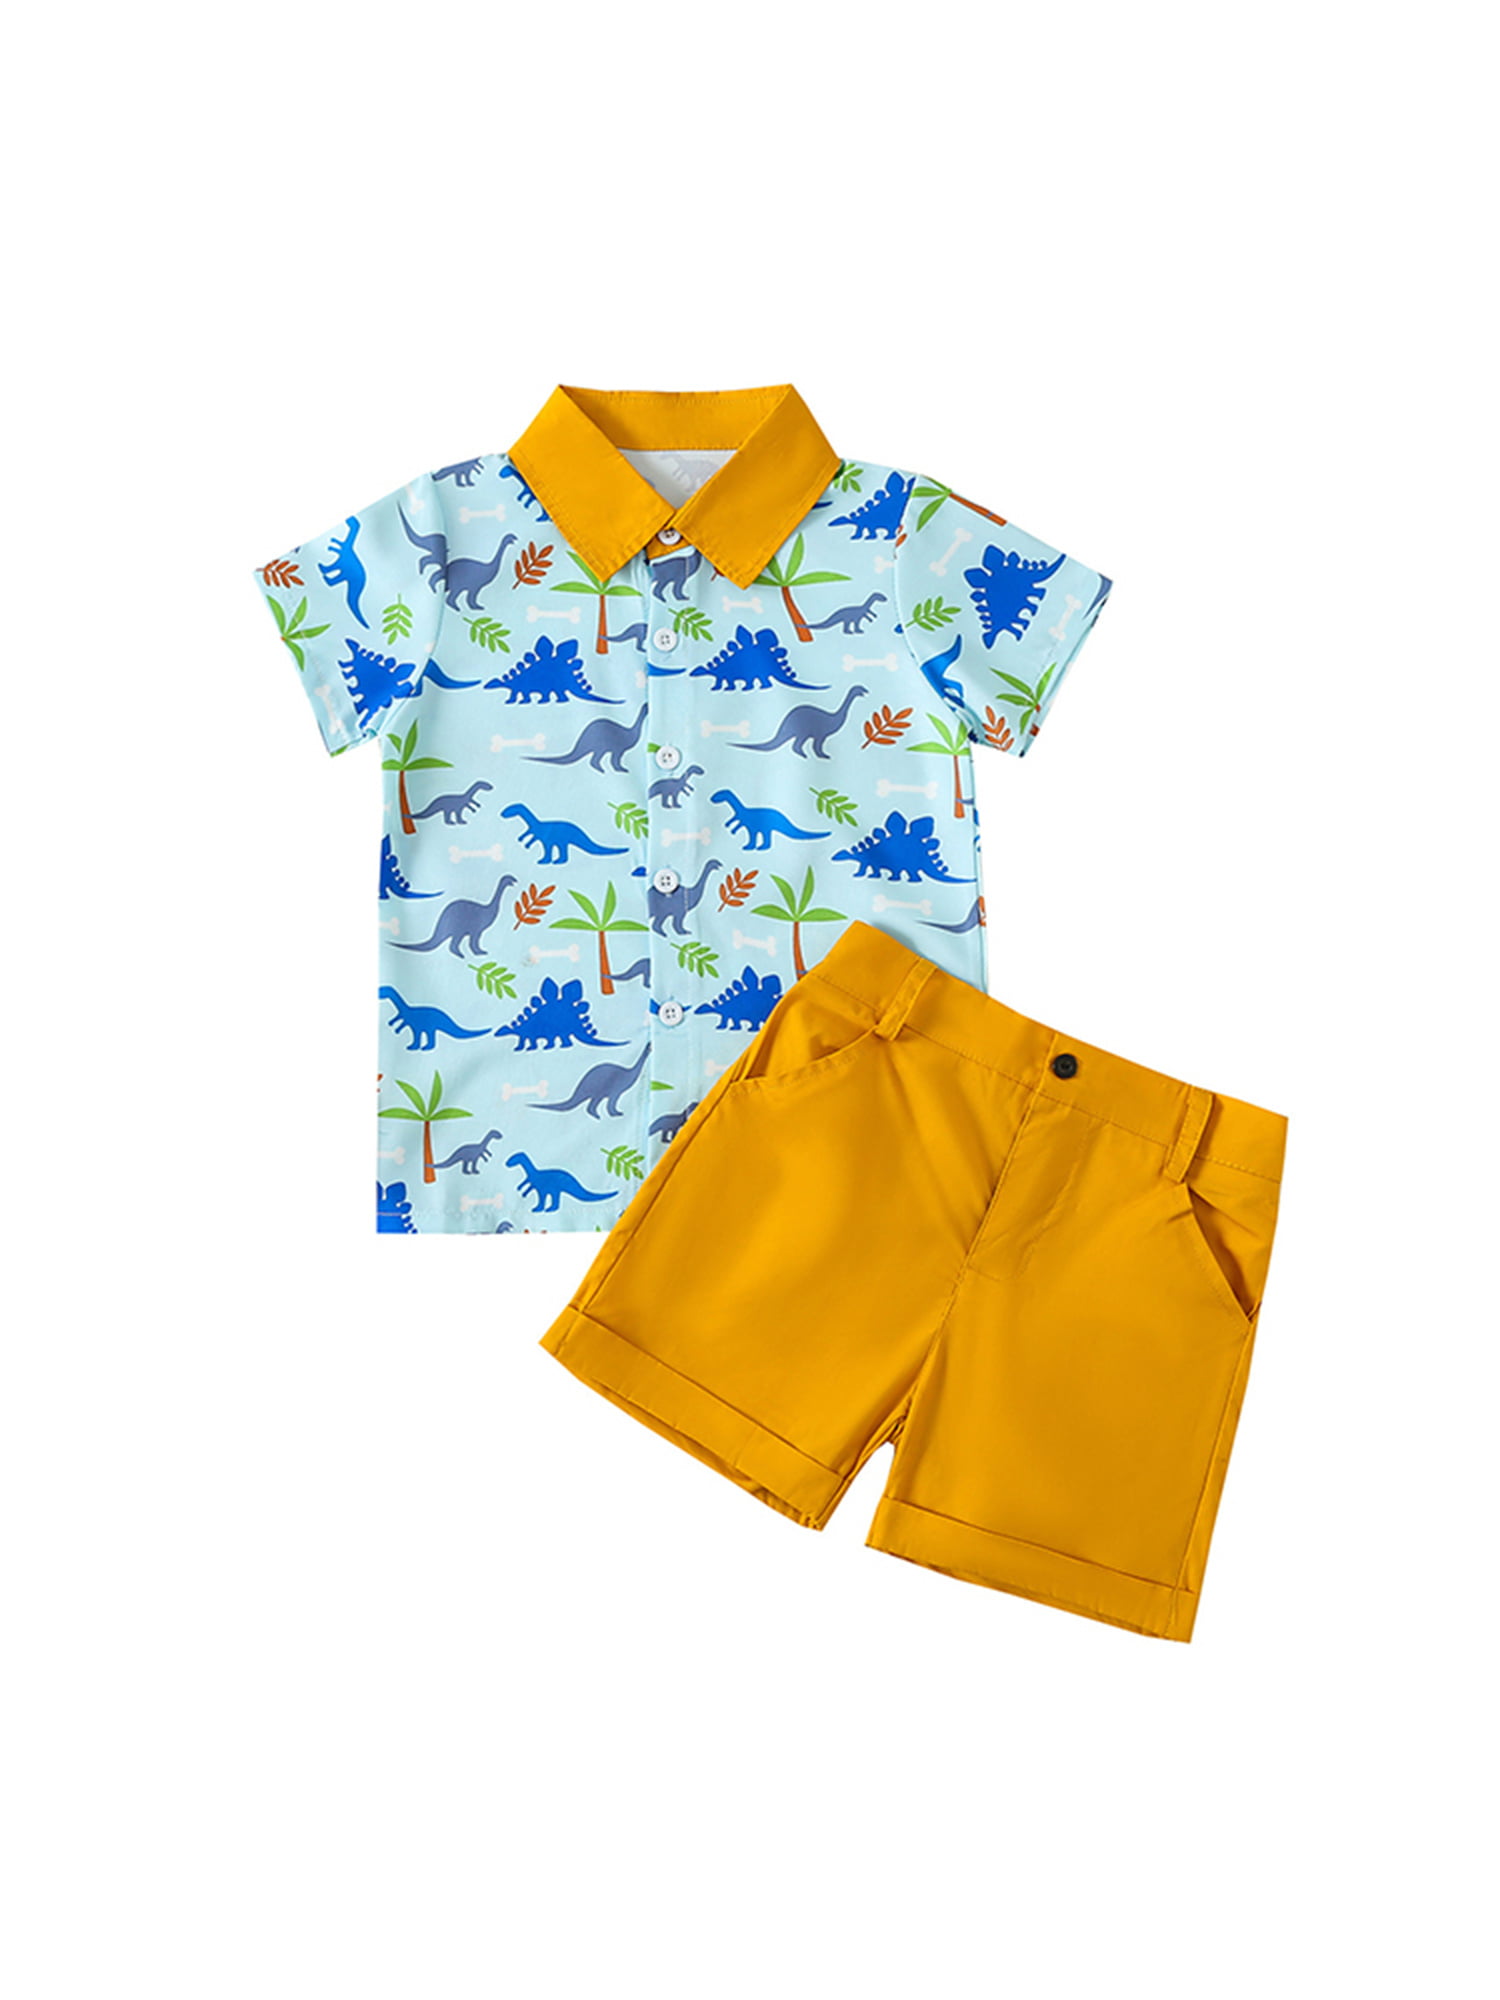 Toddler Baby Boys Dinosaur Shirt Outfits Clothes Short Sleeve Tops ShortsSet 